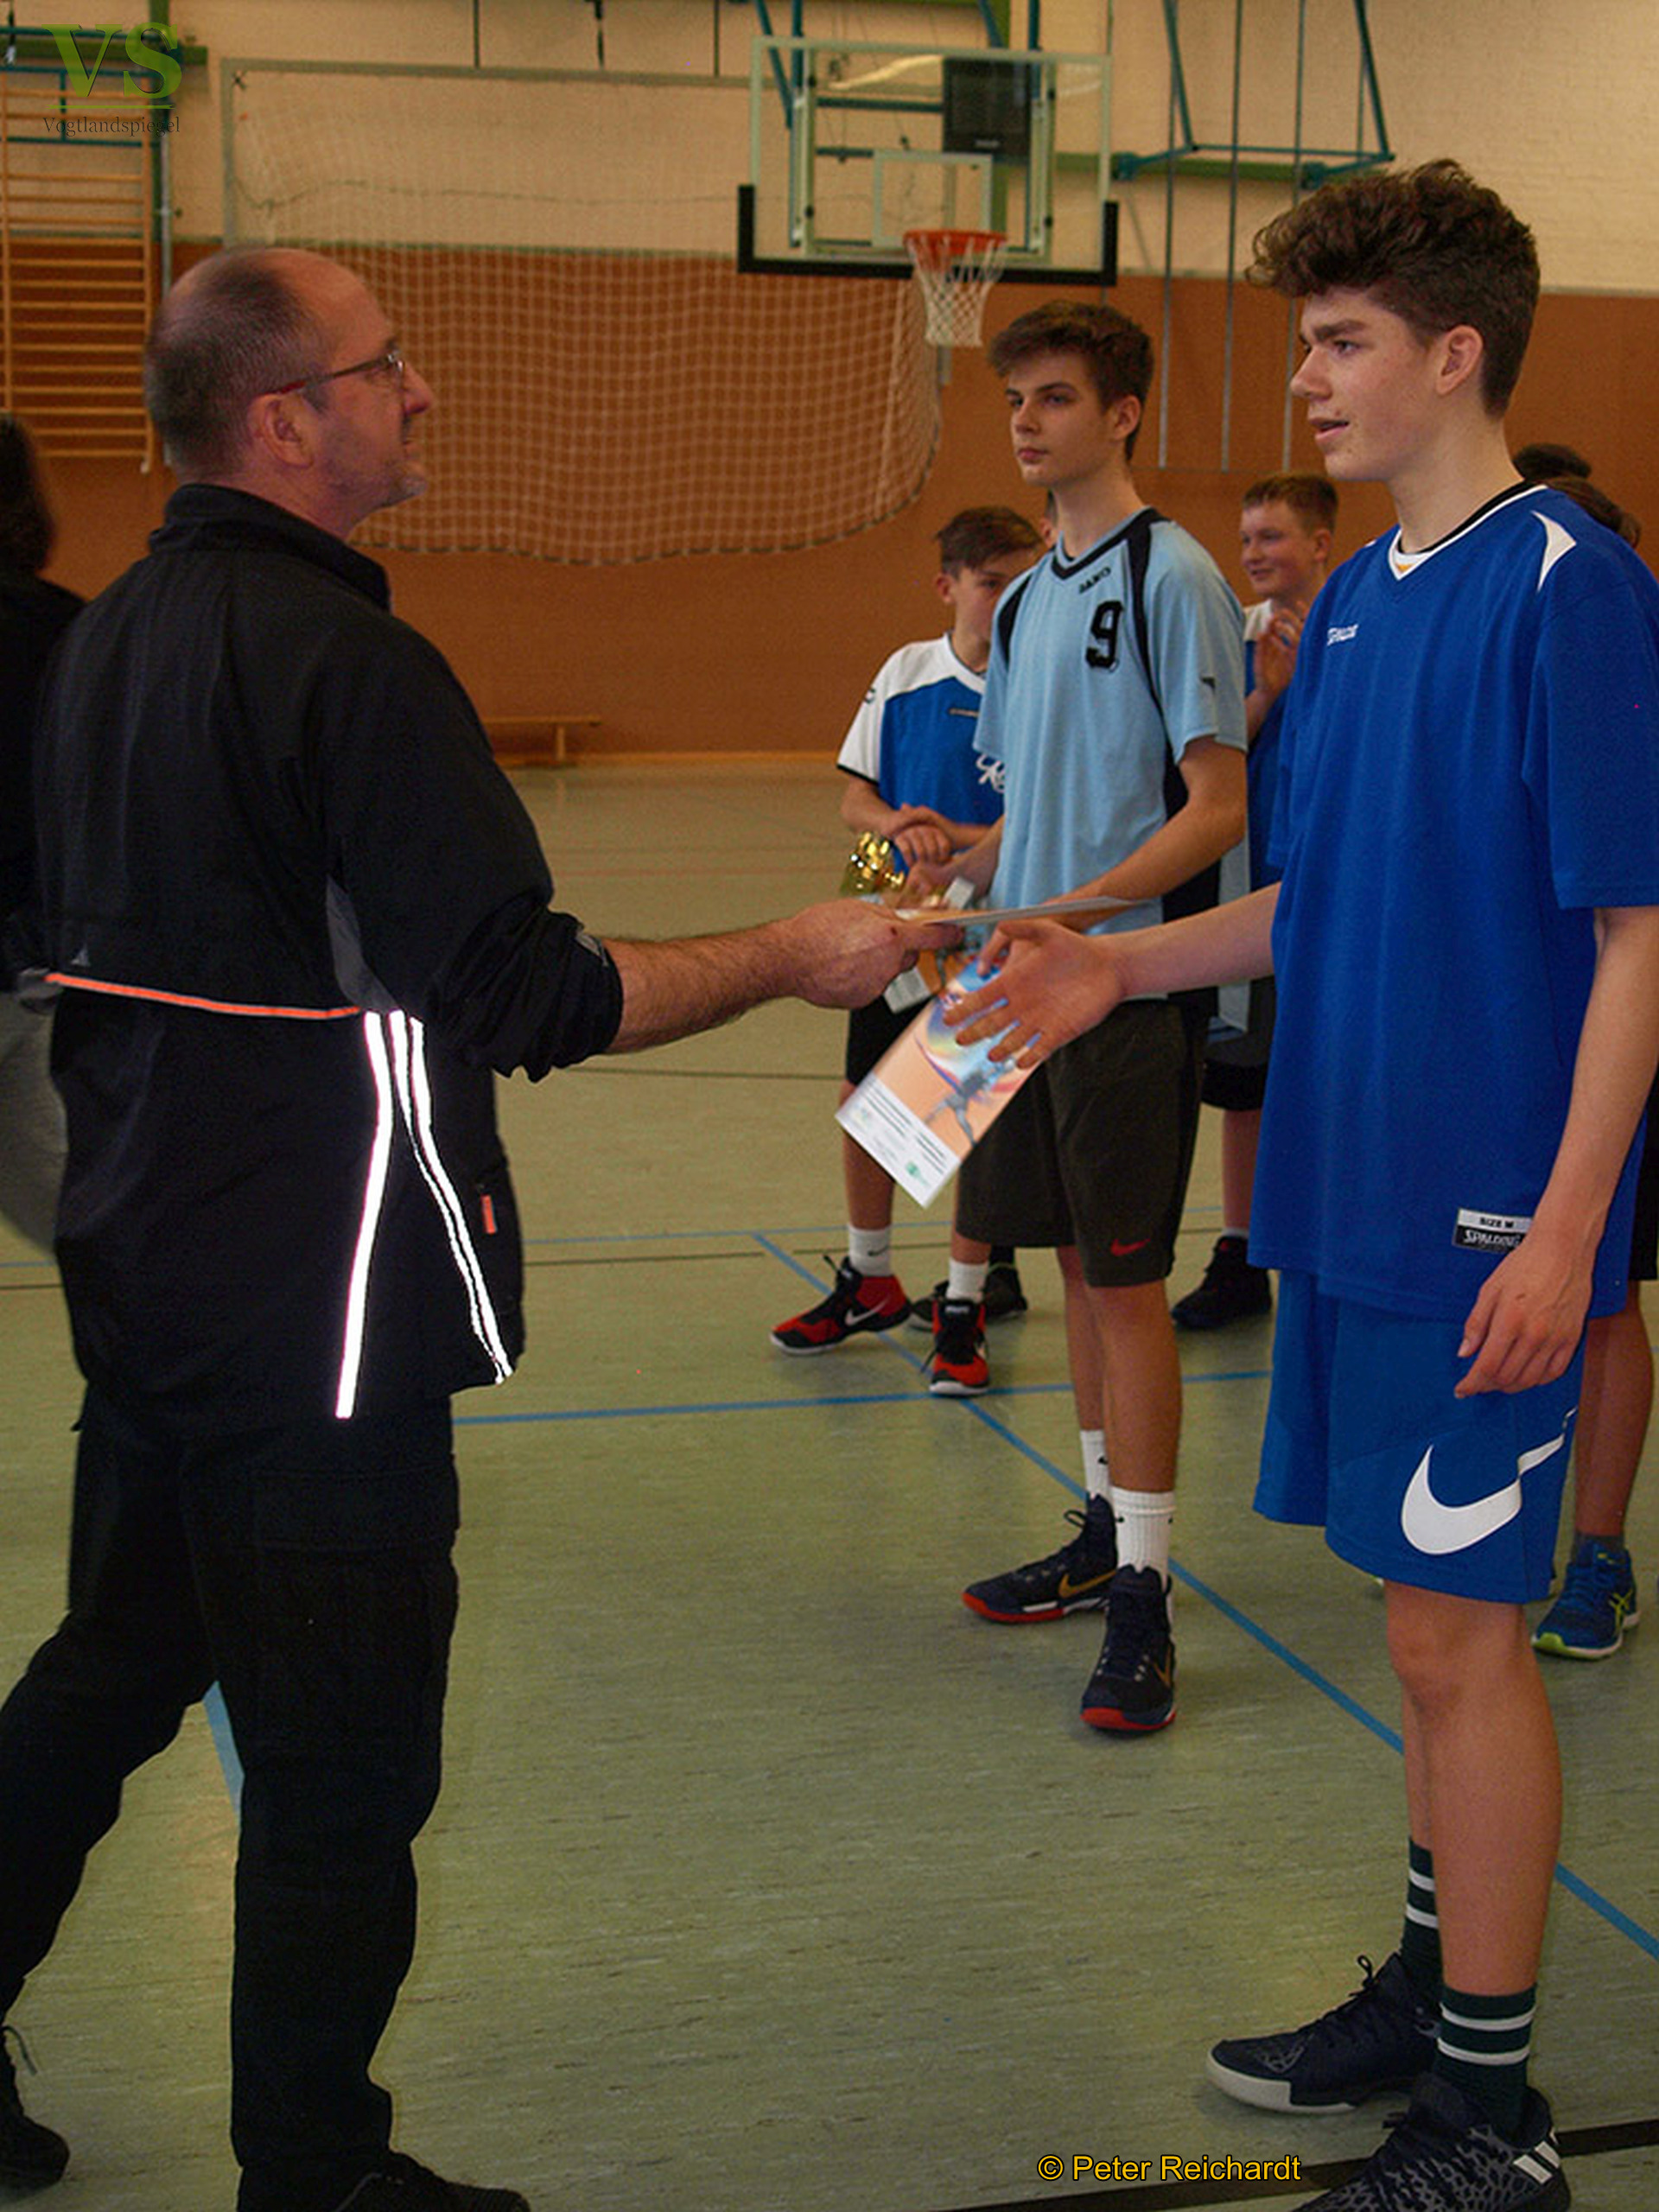 Greiz: Schulamtsfinale Ostthüringen Basketball der Jungen